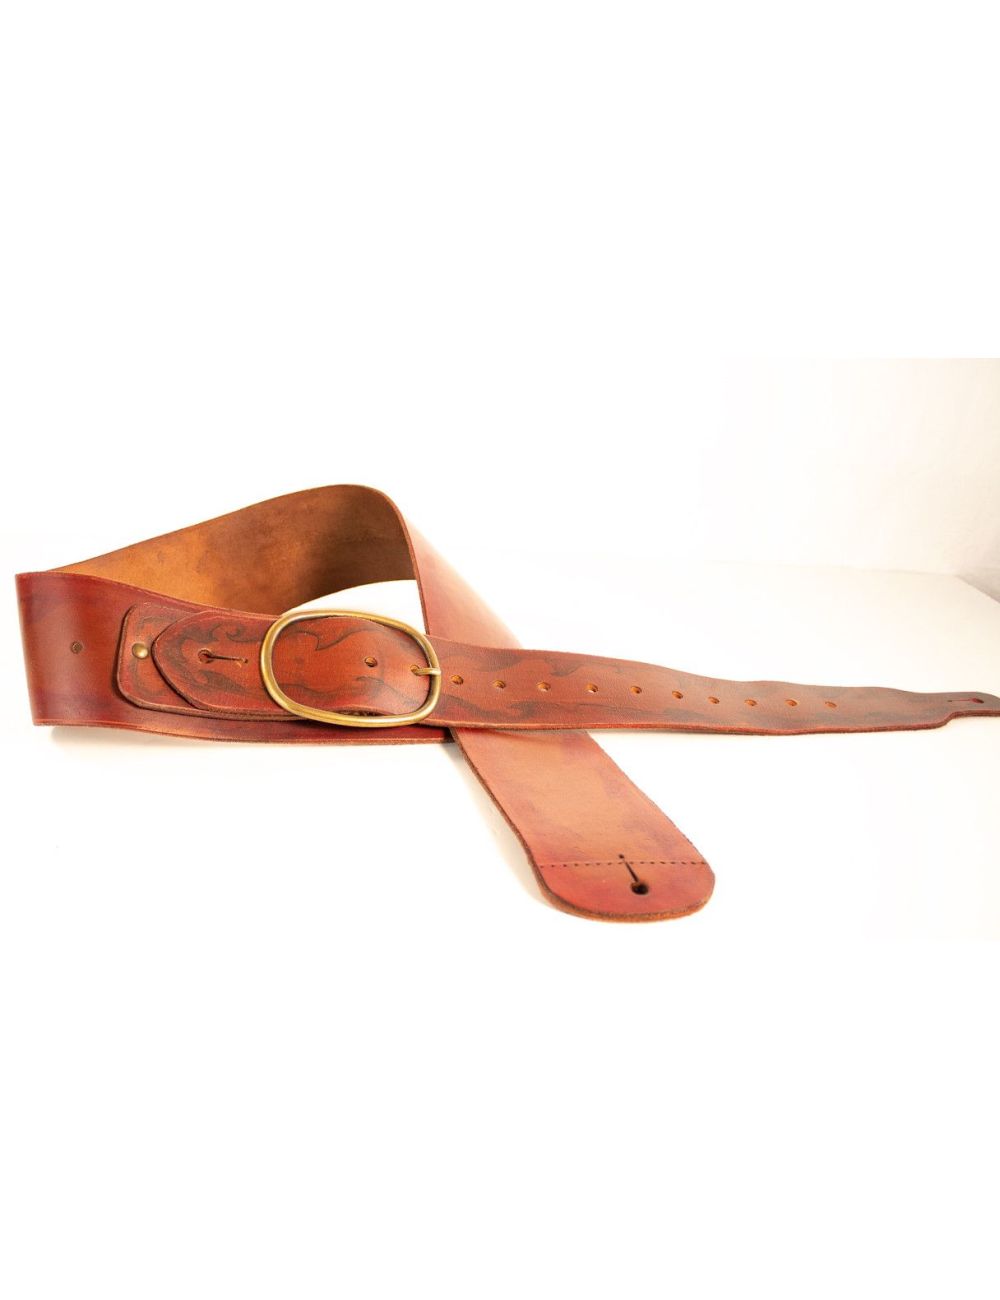 sangle de guitare en cuir marron brun patiné - Made in France